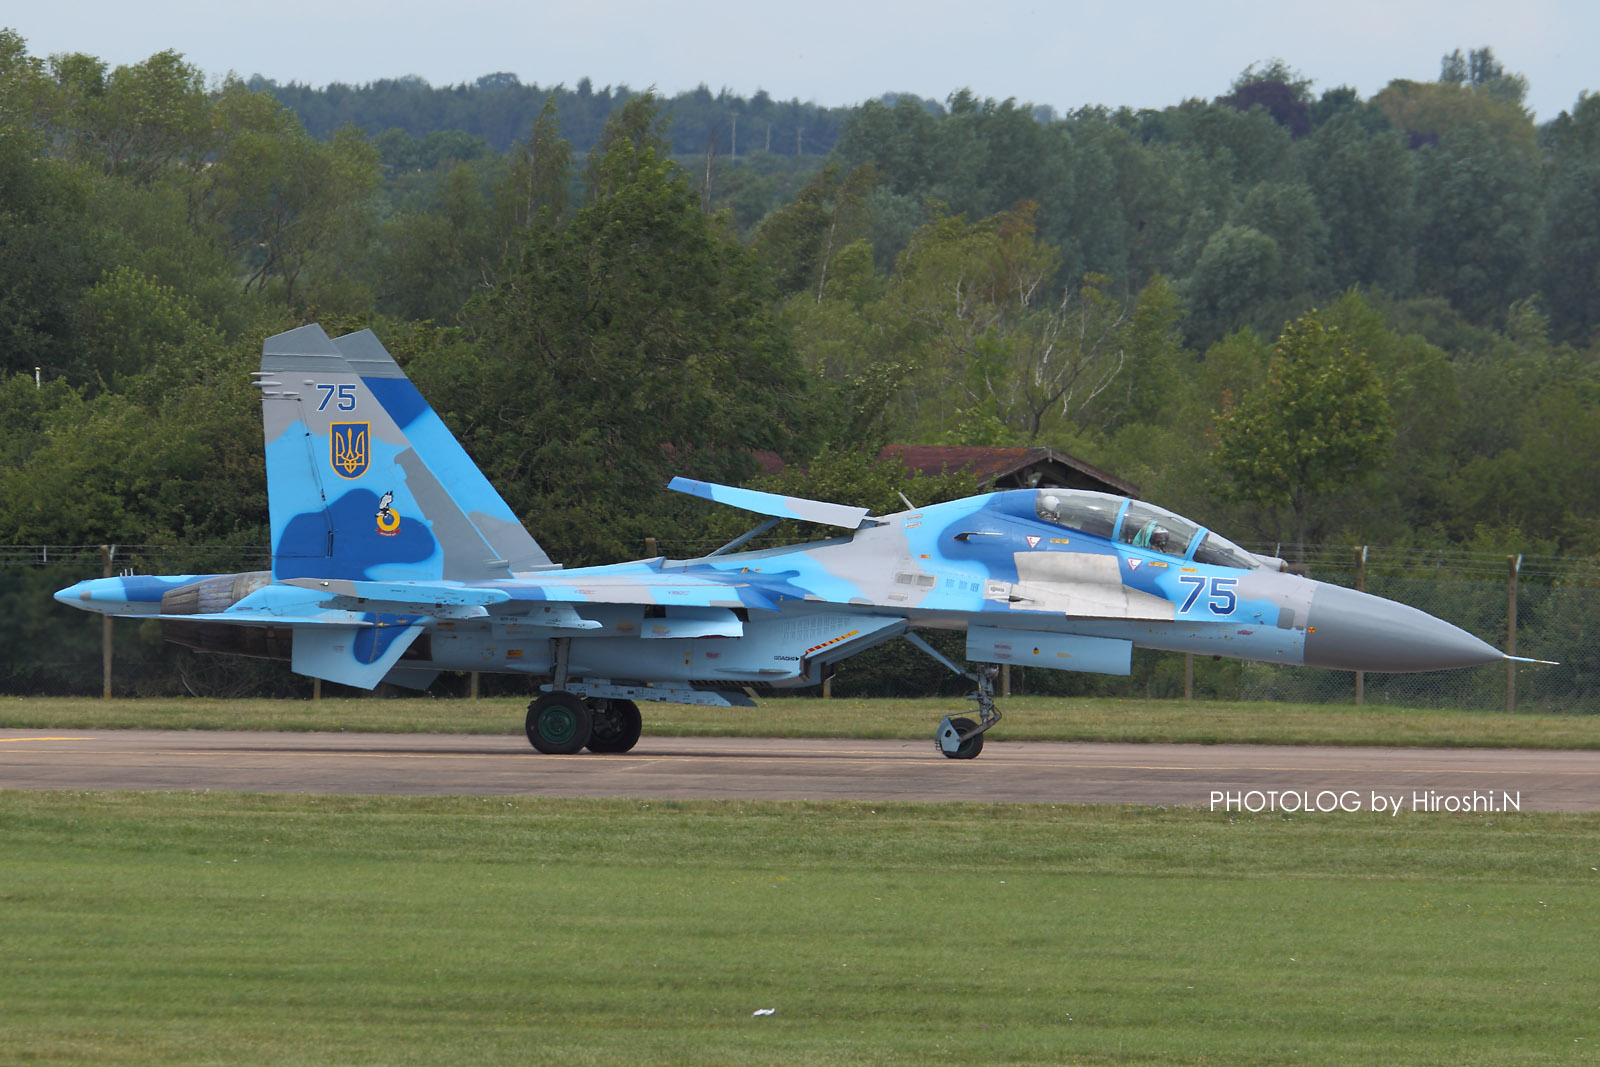 2011/7/18 Mon. RIAT2011 - \"Ukrainian Air Force Su-27,Il-76MD\" Static Display and Deperture_b0183406_0195889.jpg